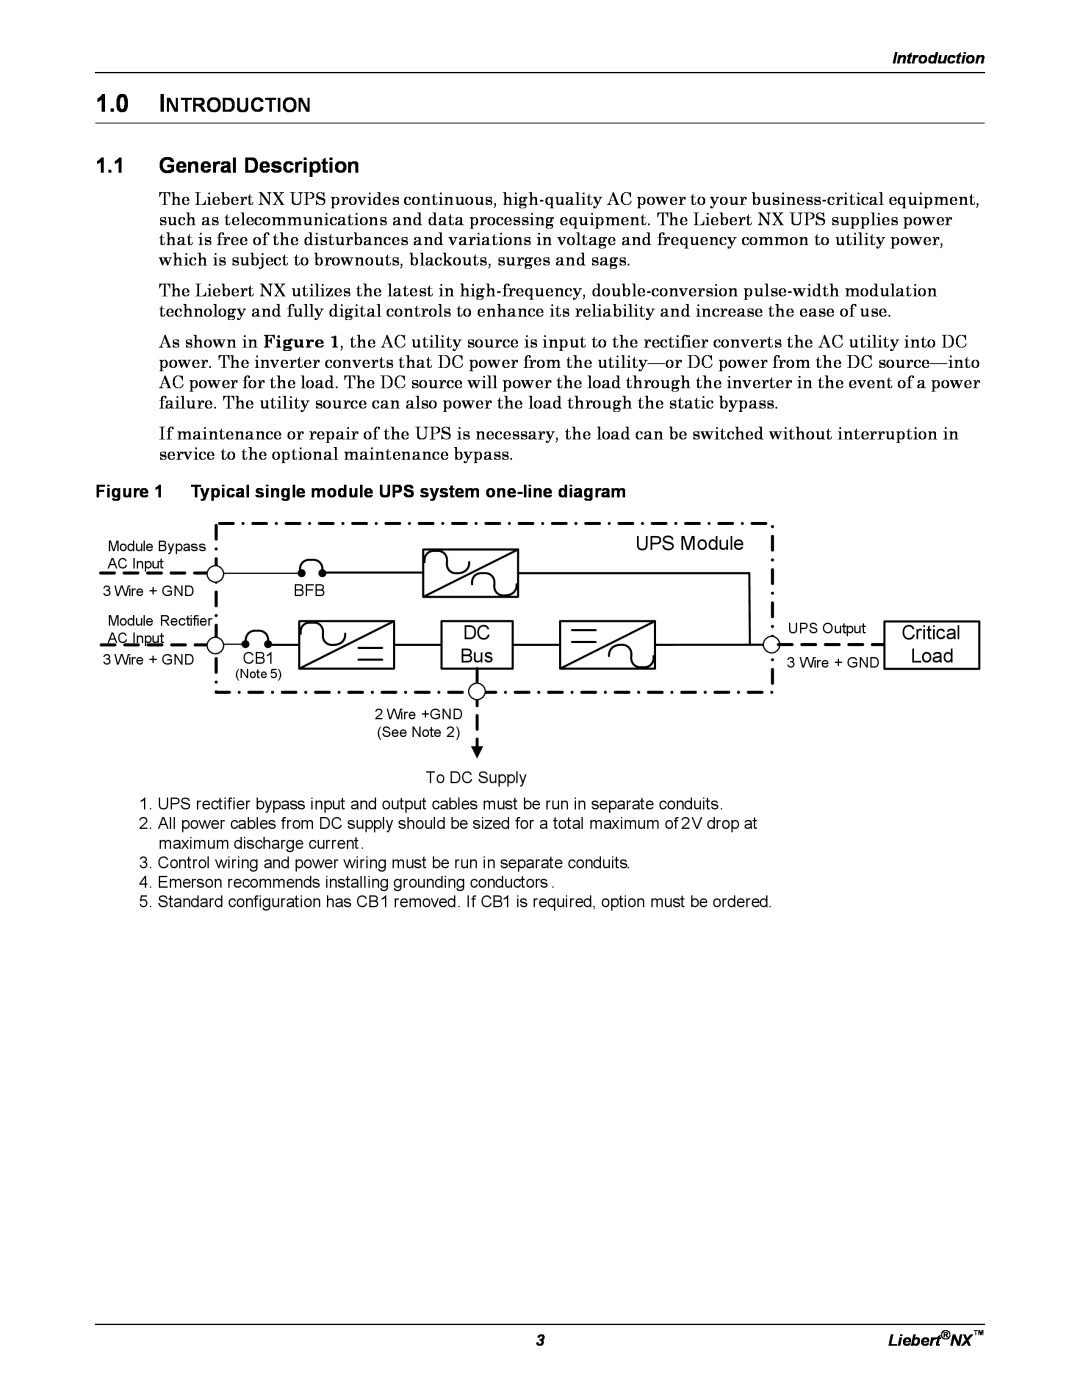 Emerson NX manual General Description, Introduction, UPS Module, Critical Load 